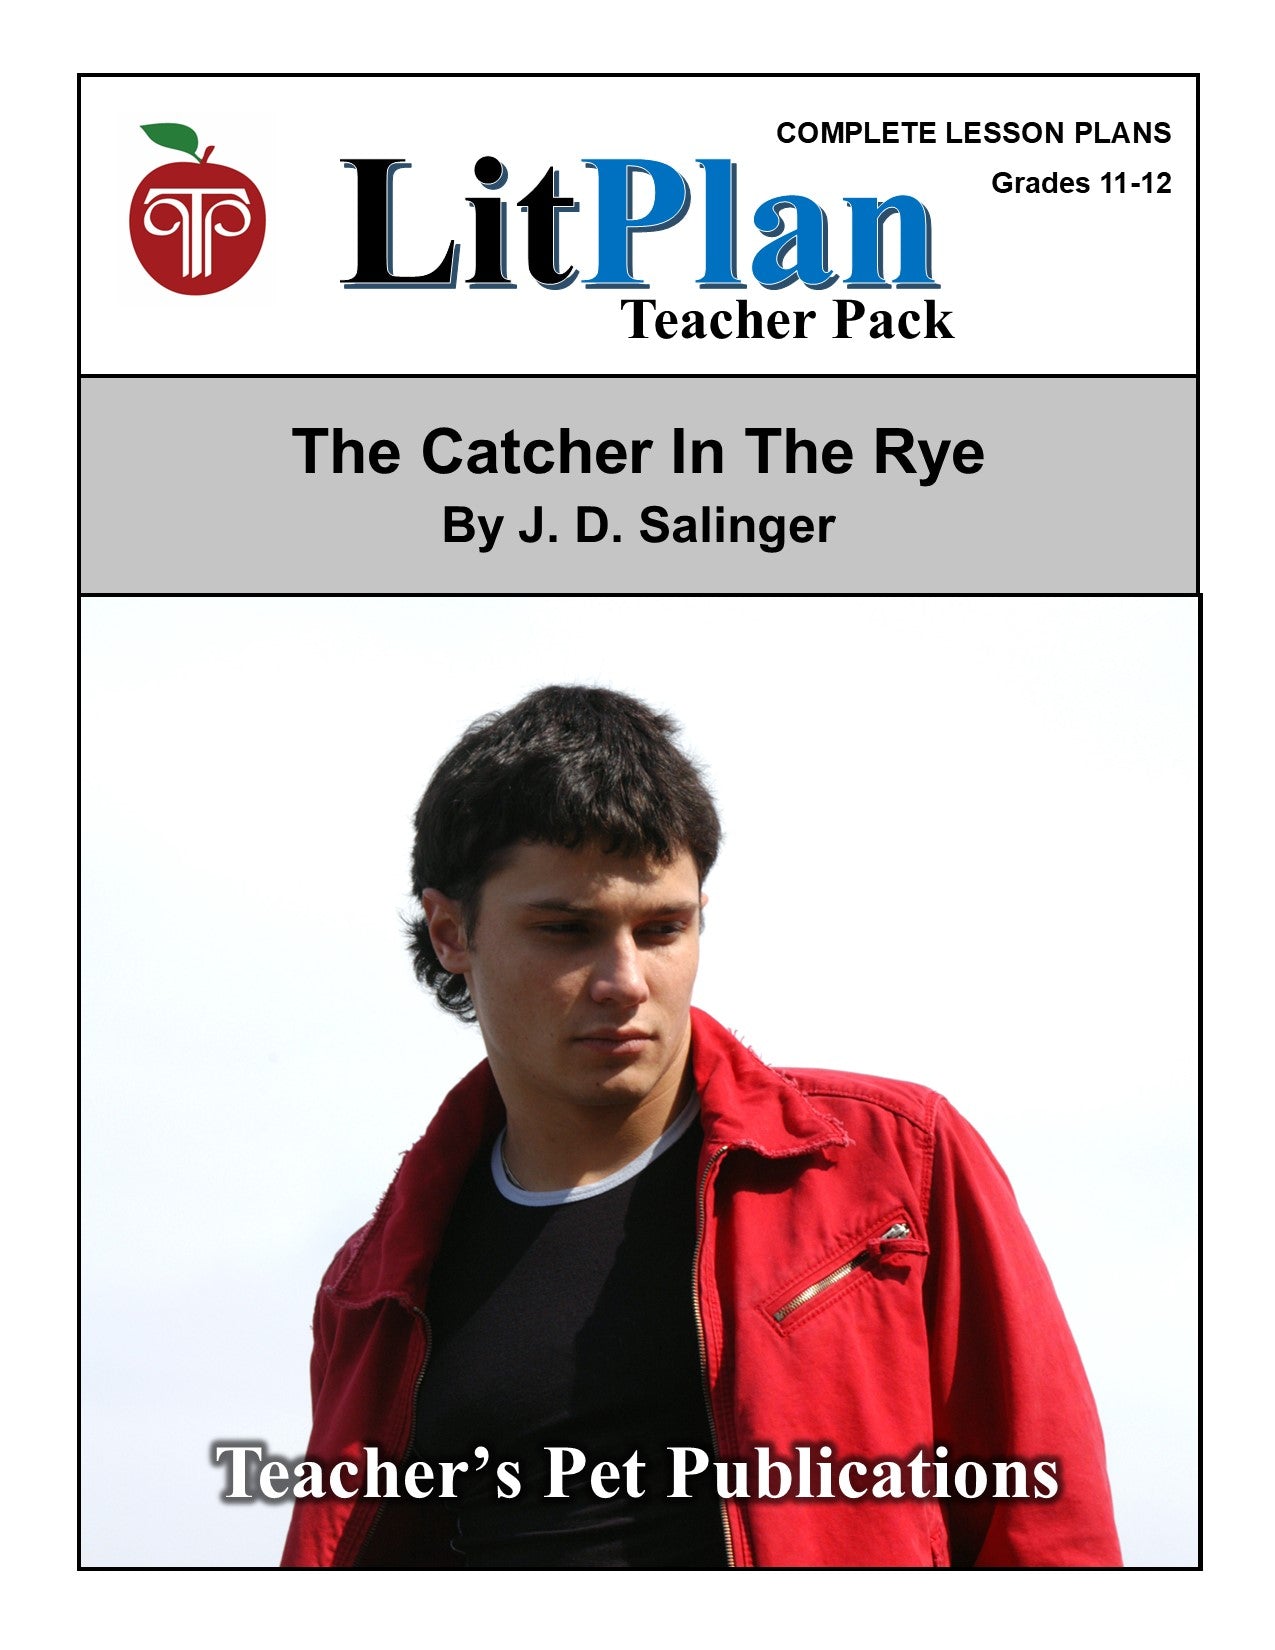 The Catcher in the Rye: LitPlan Teacher Pack Grades 11-12